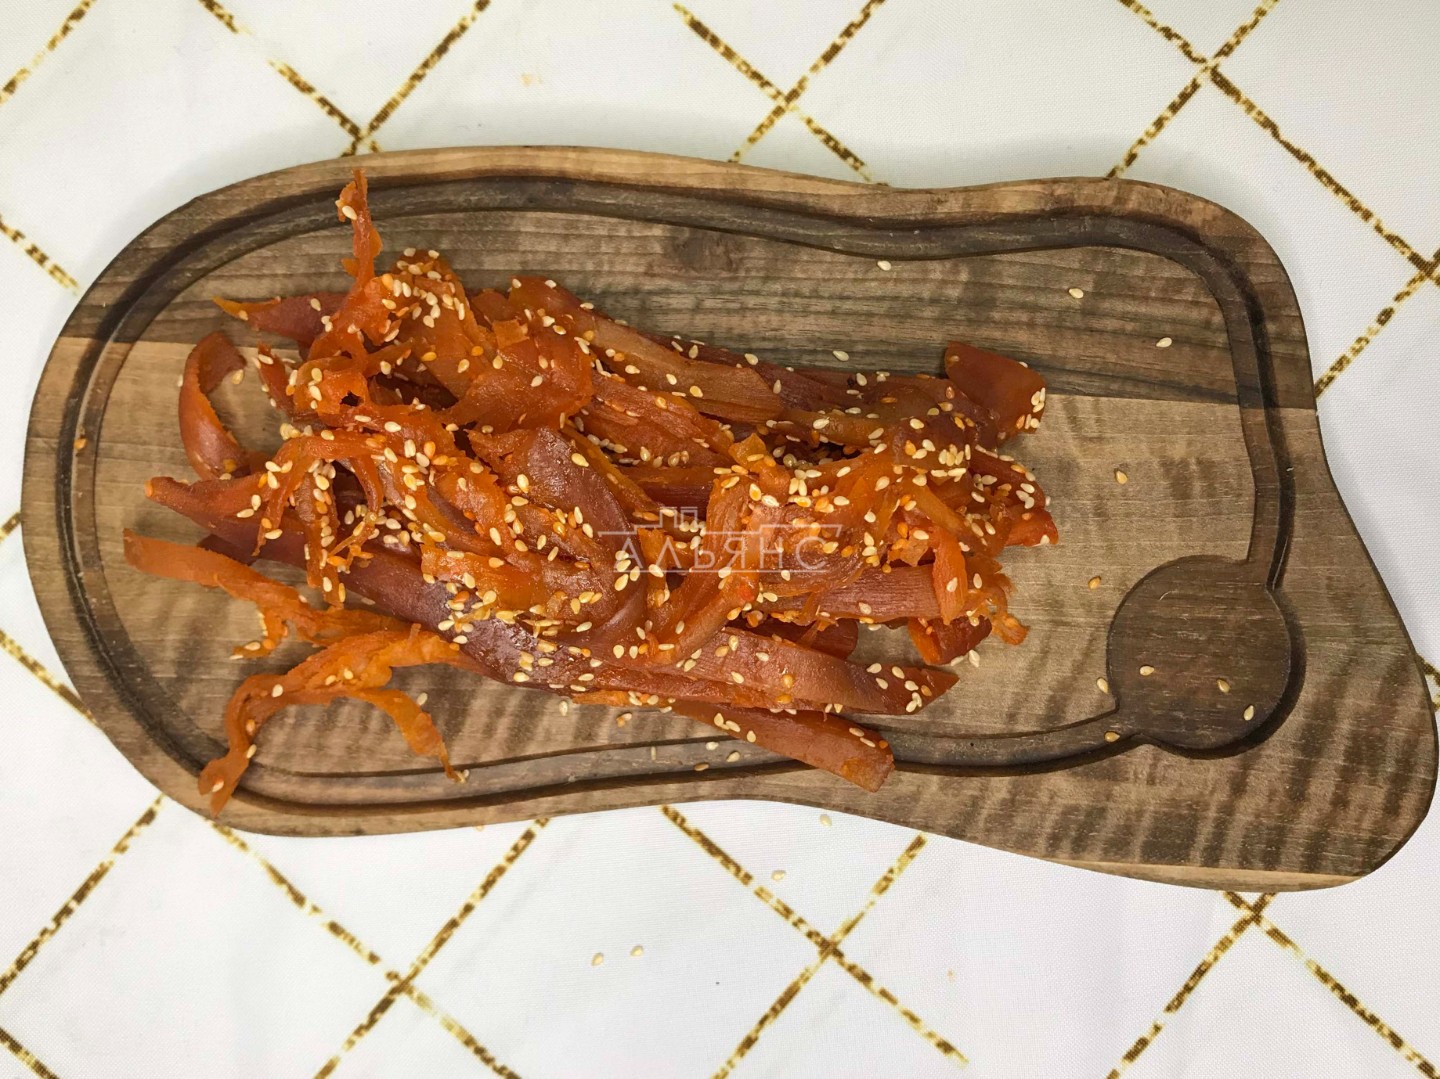 Кальмар со вкусом краба по-шанхайски в Нахабино